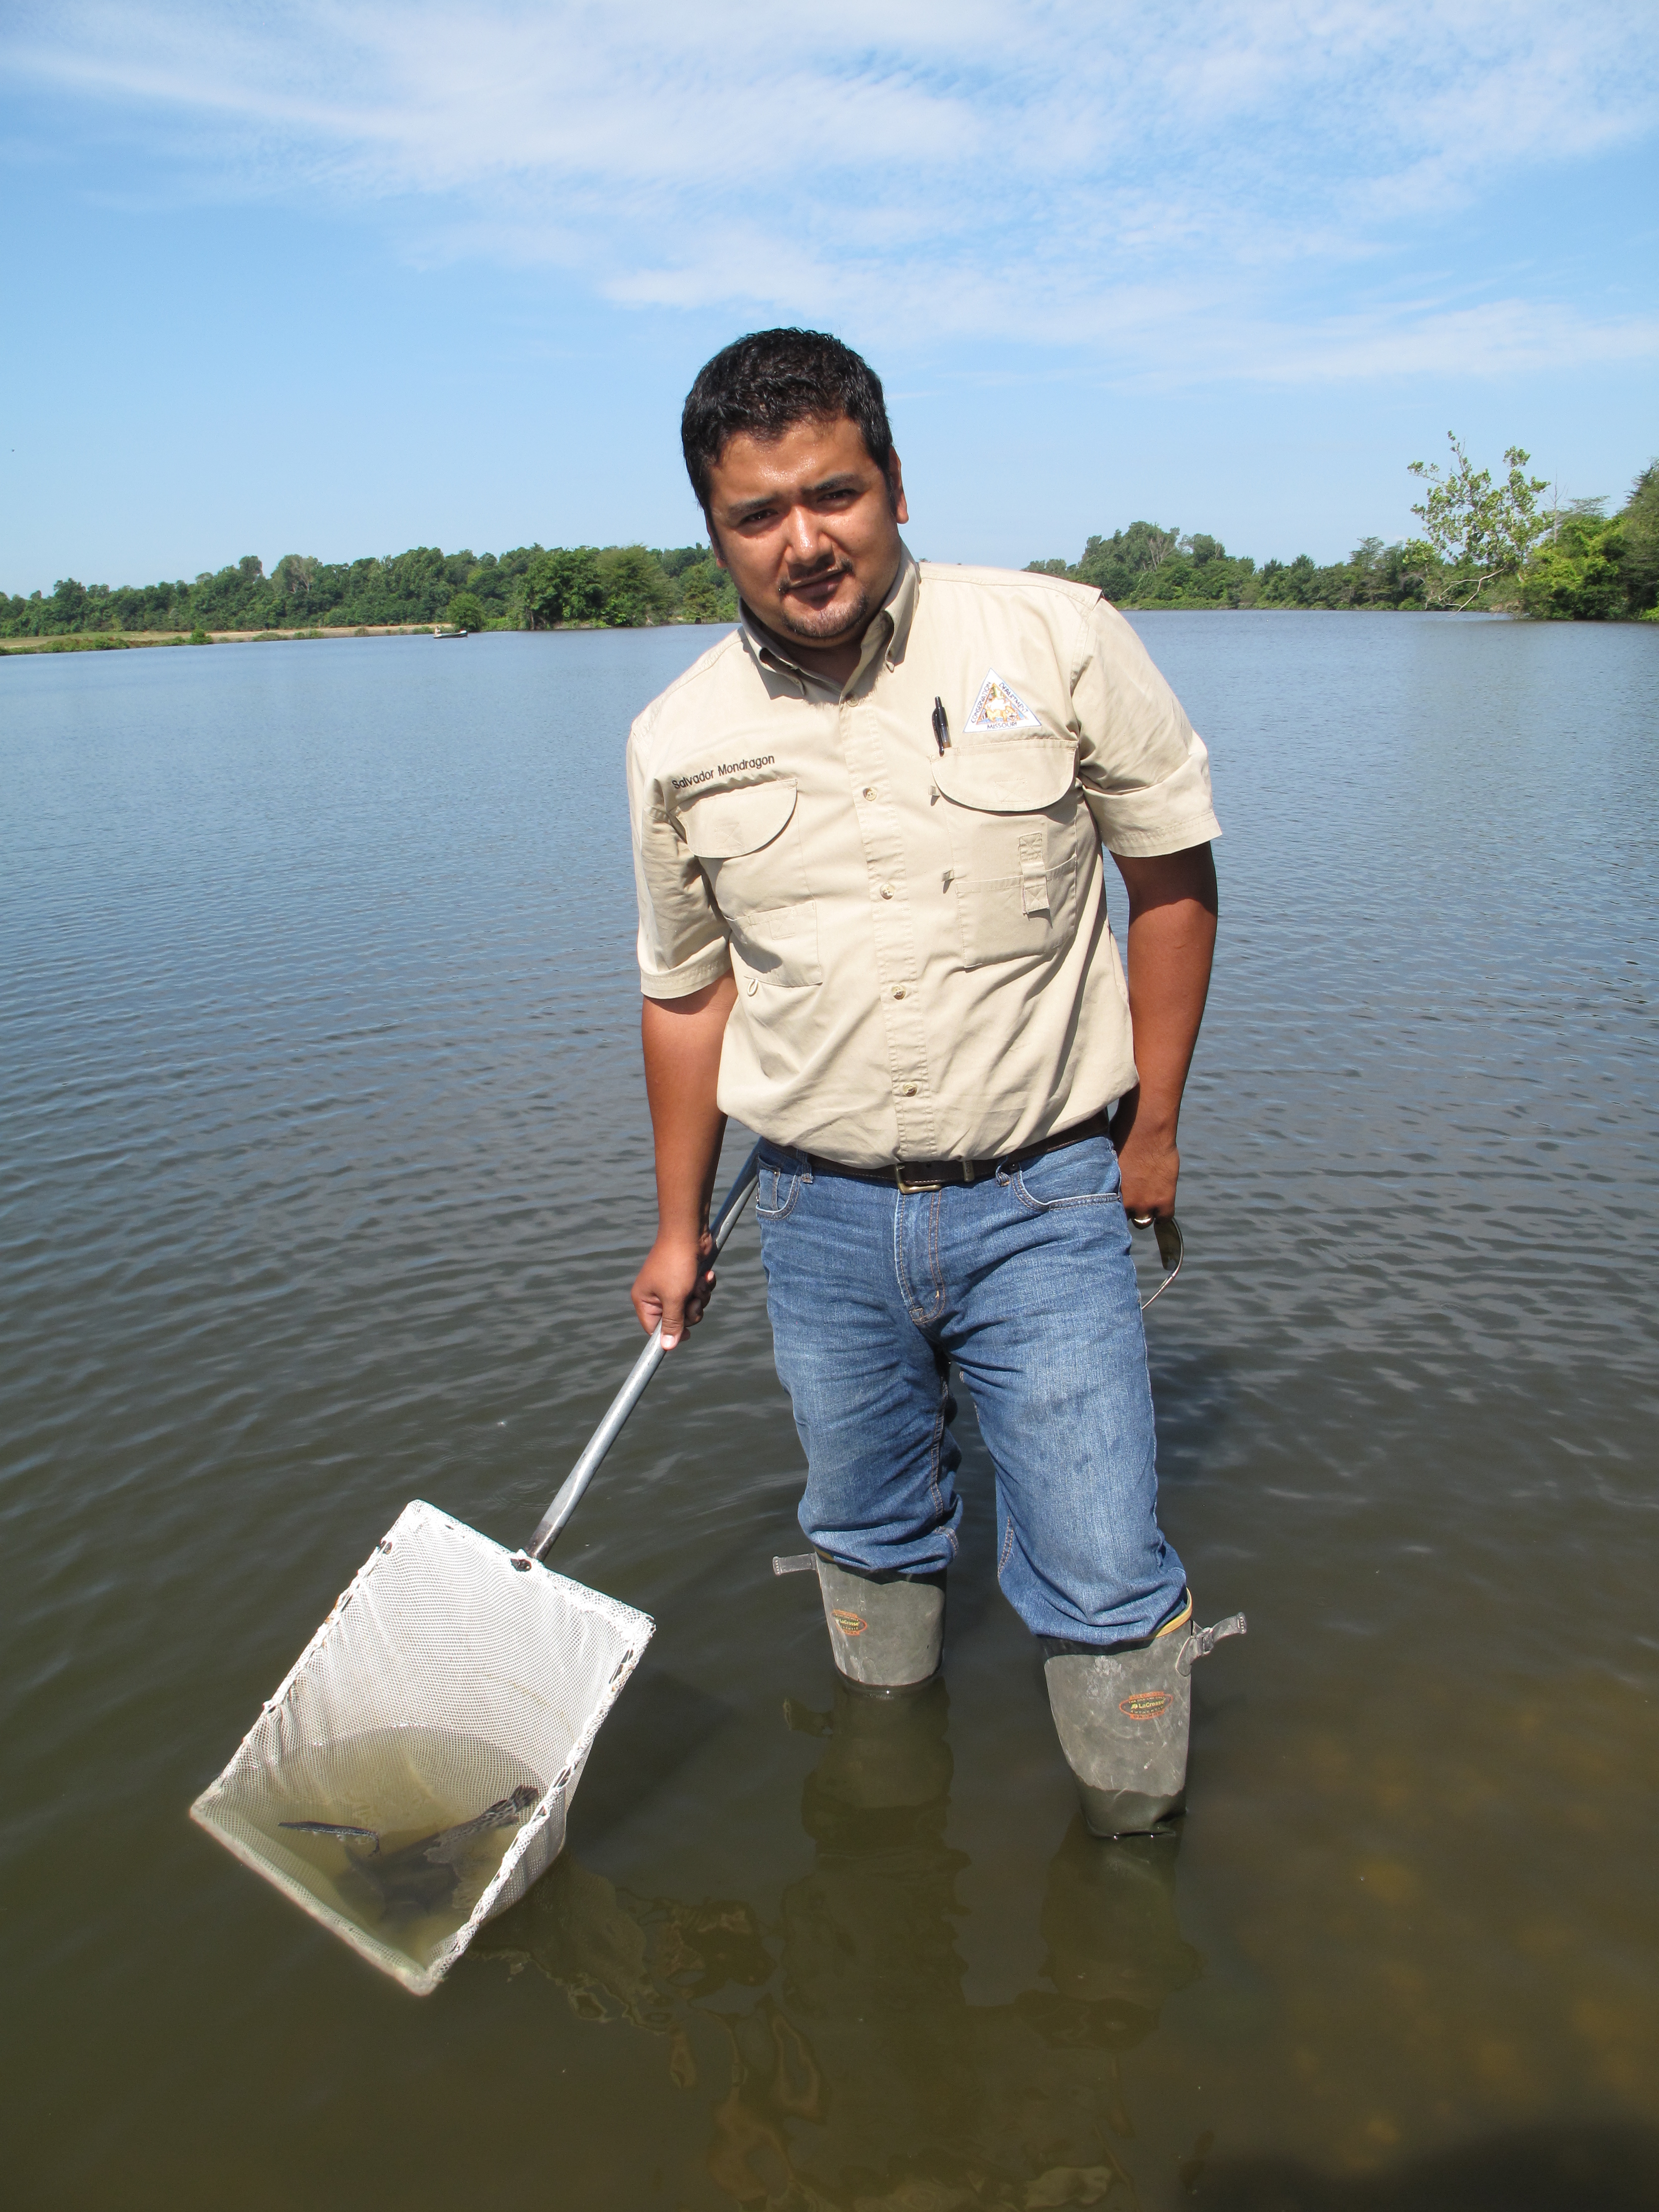 MDC Fisheries Management Biologist Salvador Mondragon